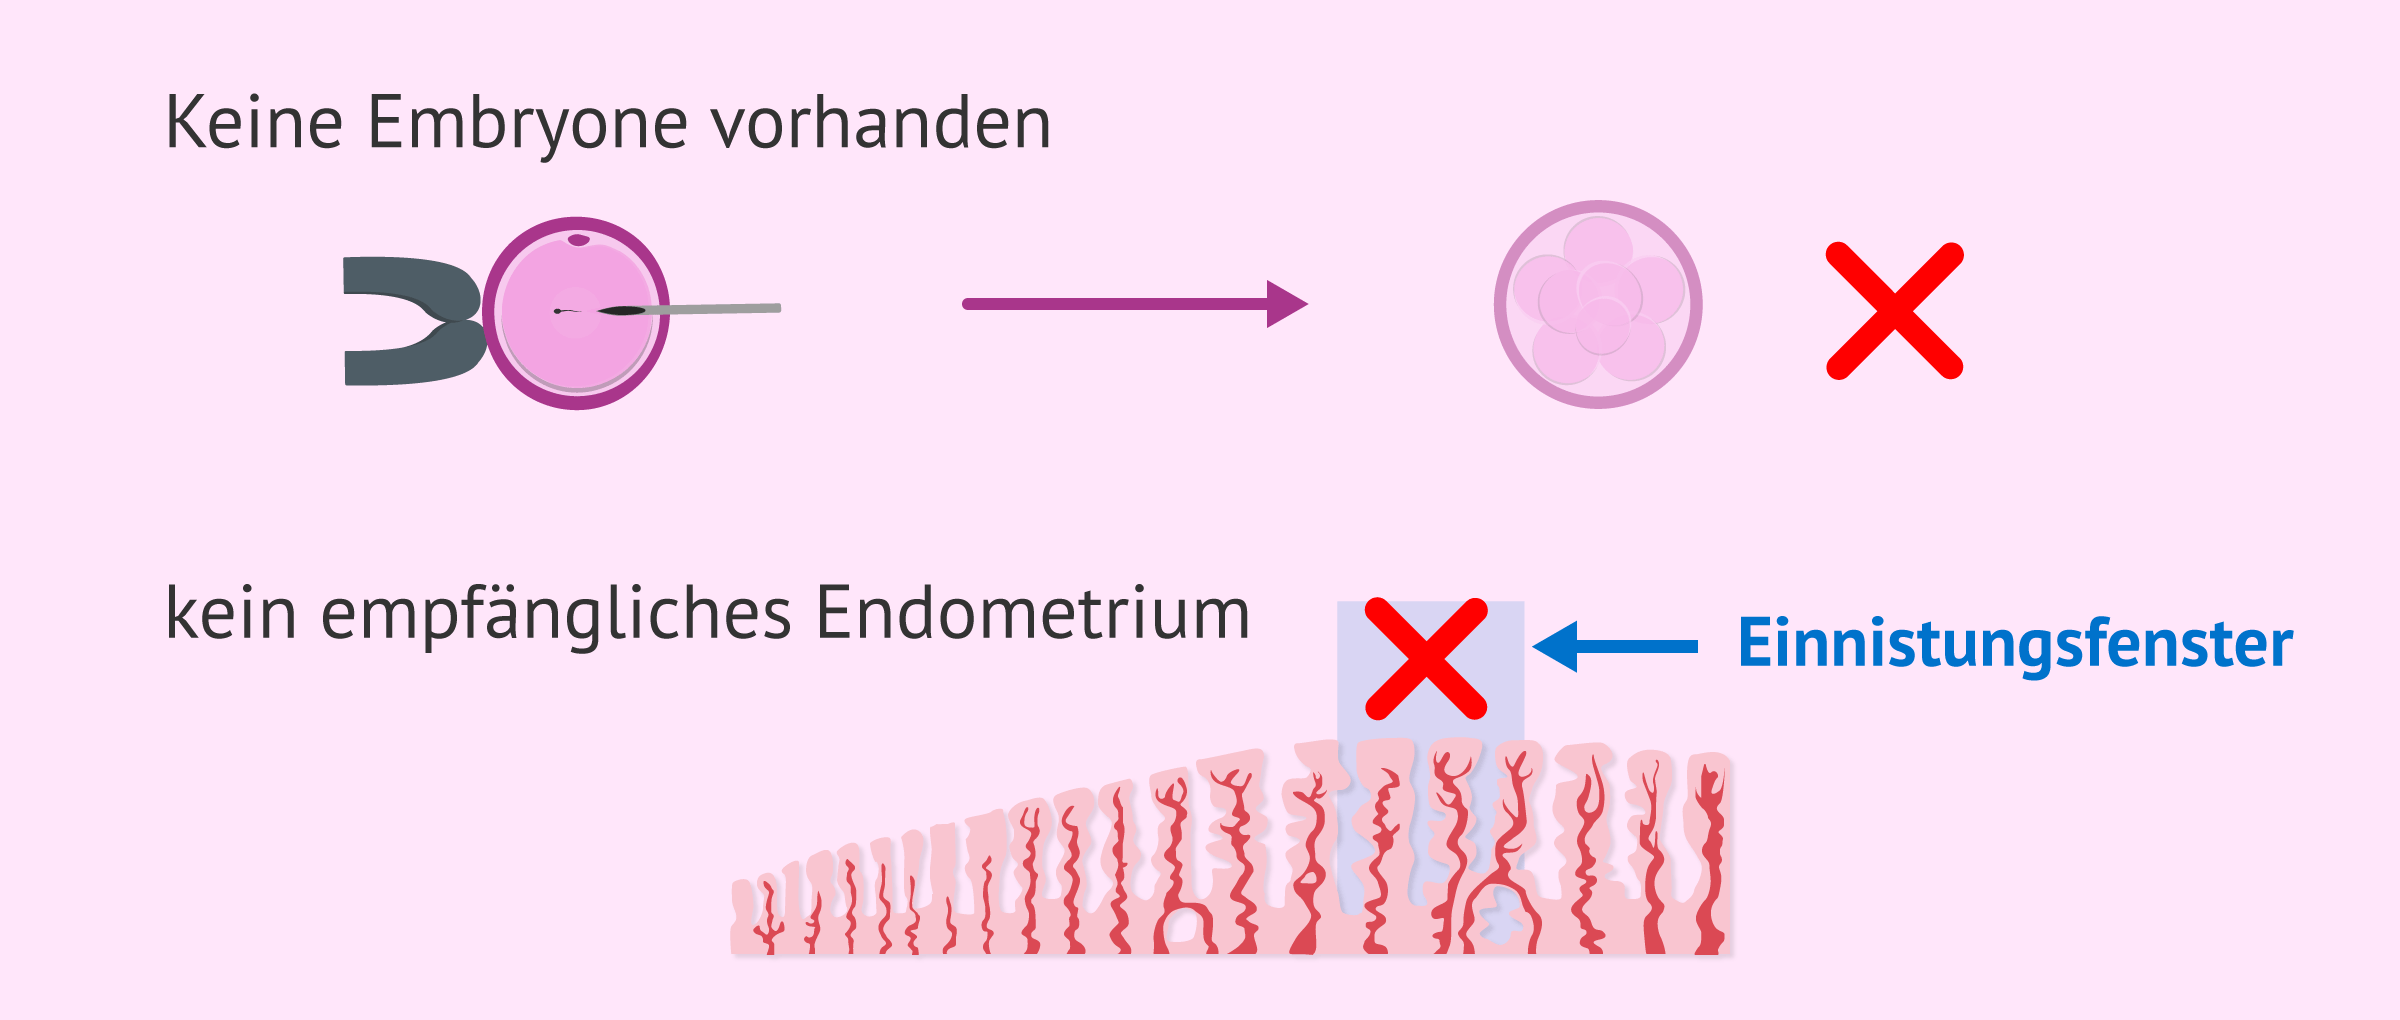 Embryotransfer abbrechen